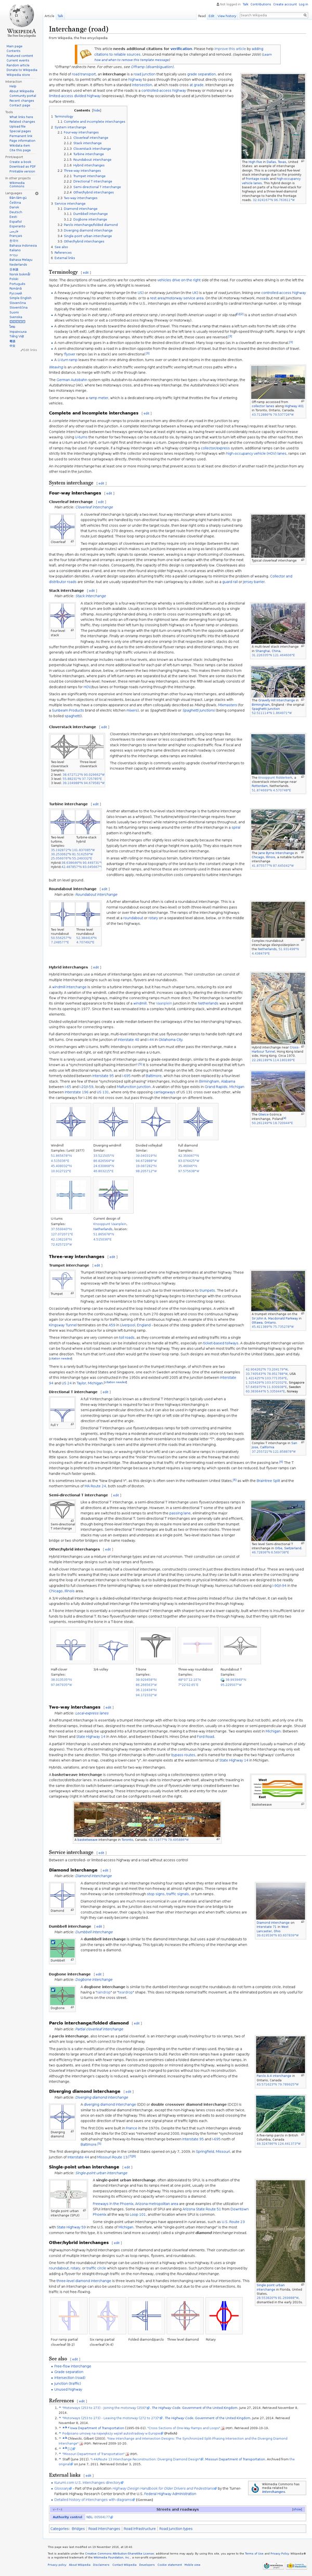 Interchange (road) - Wikipedia, the free encyclopedia